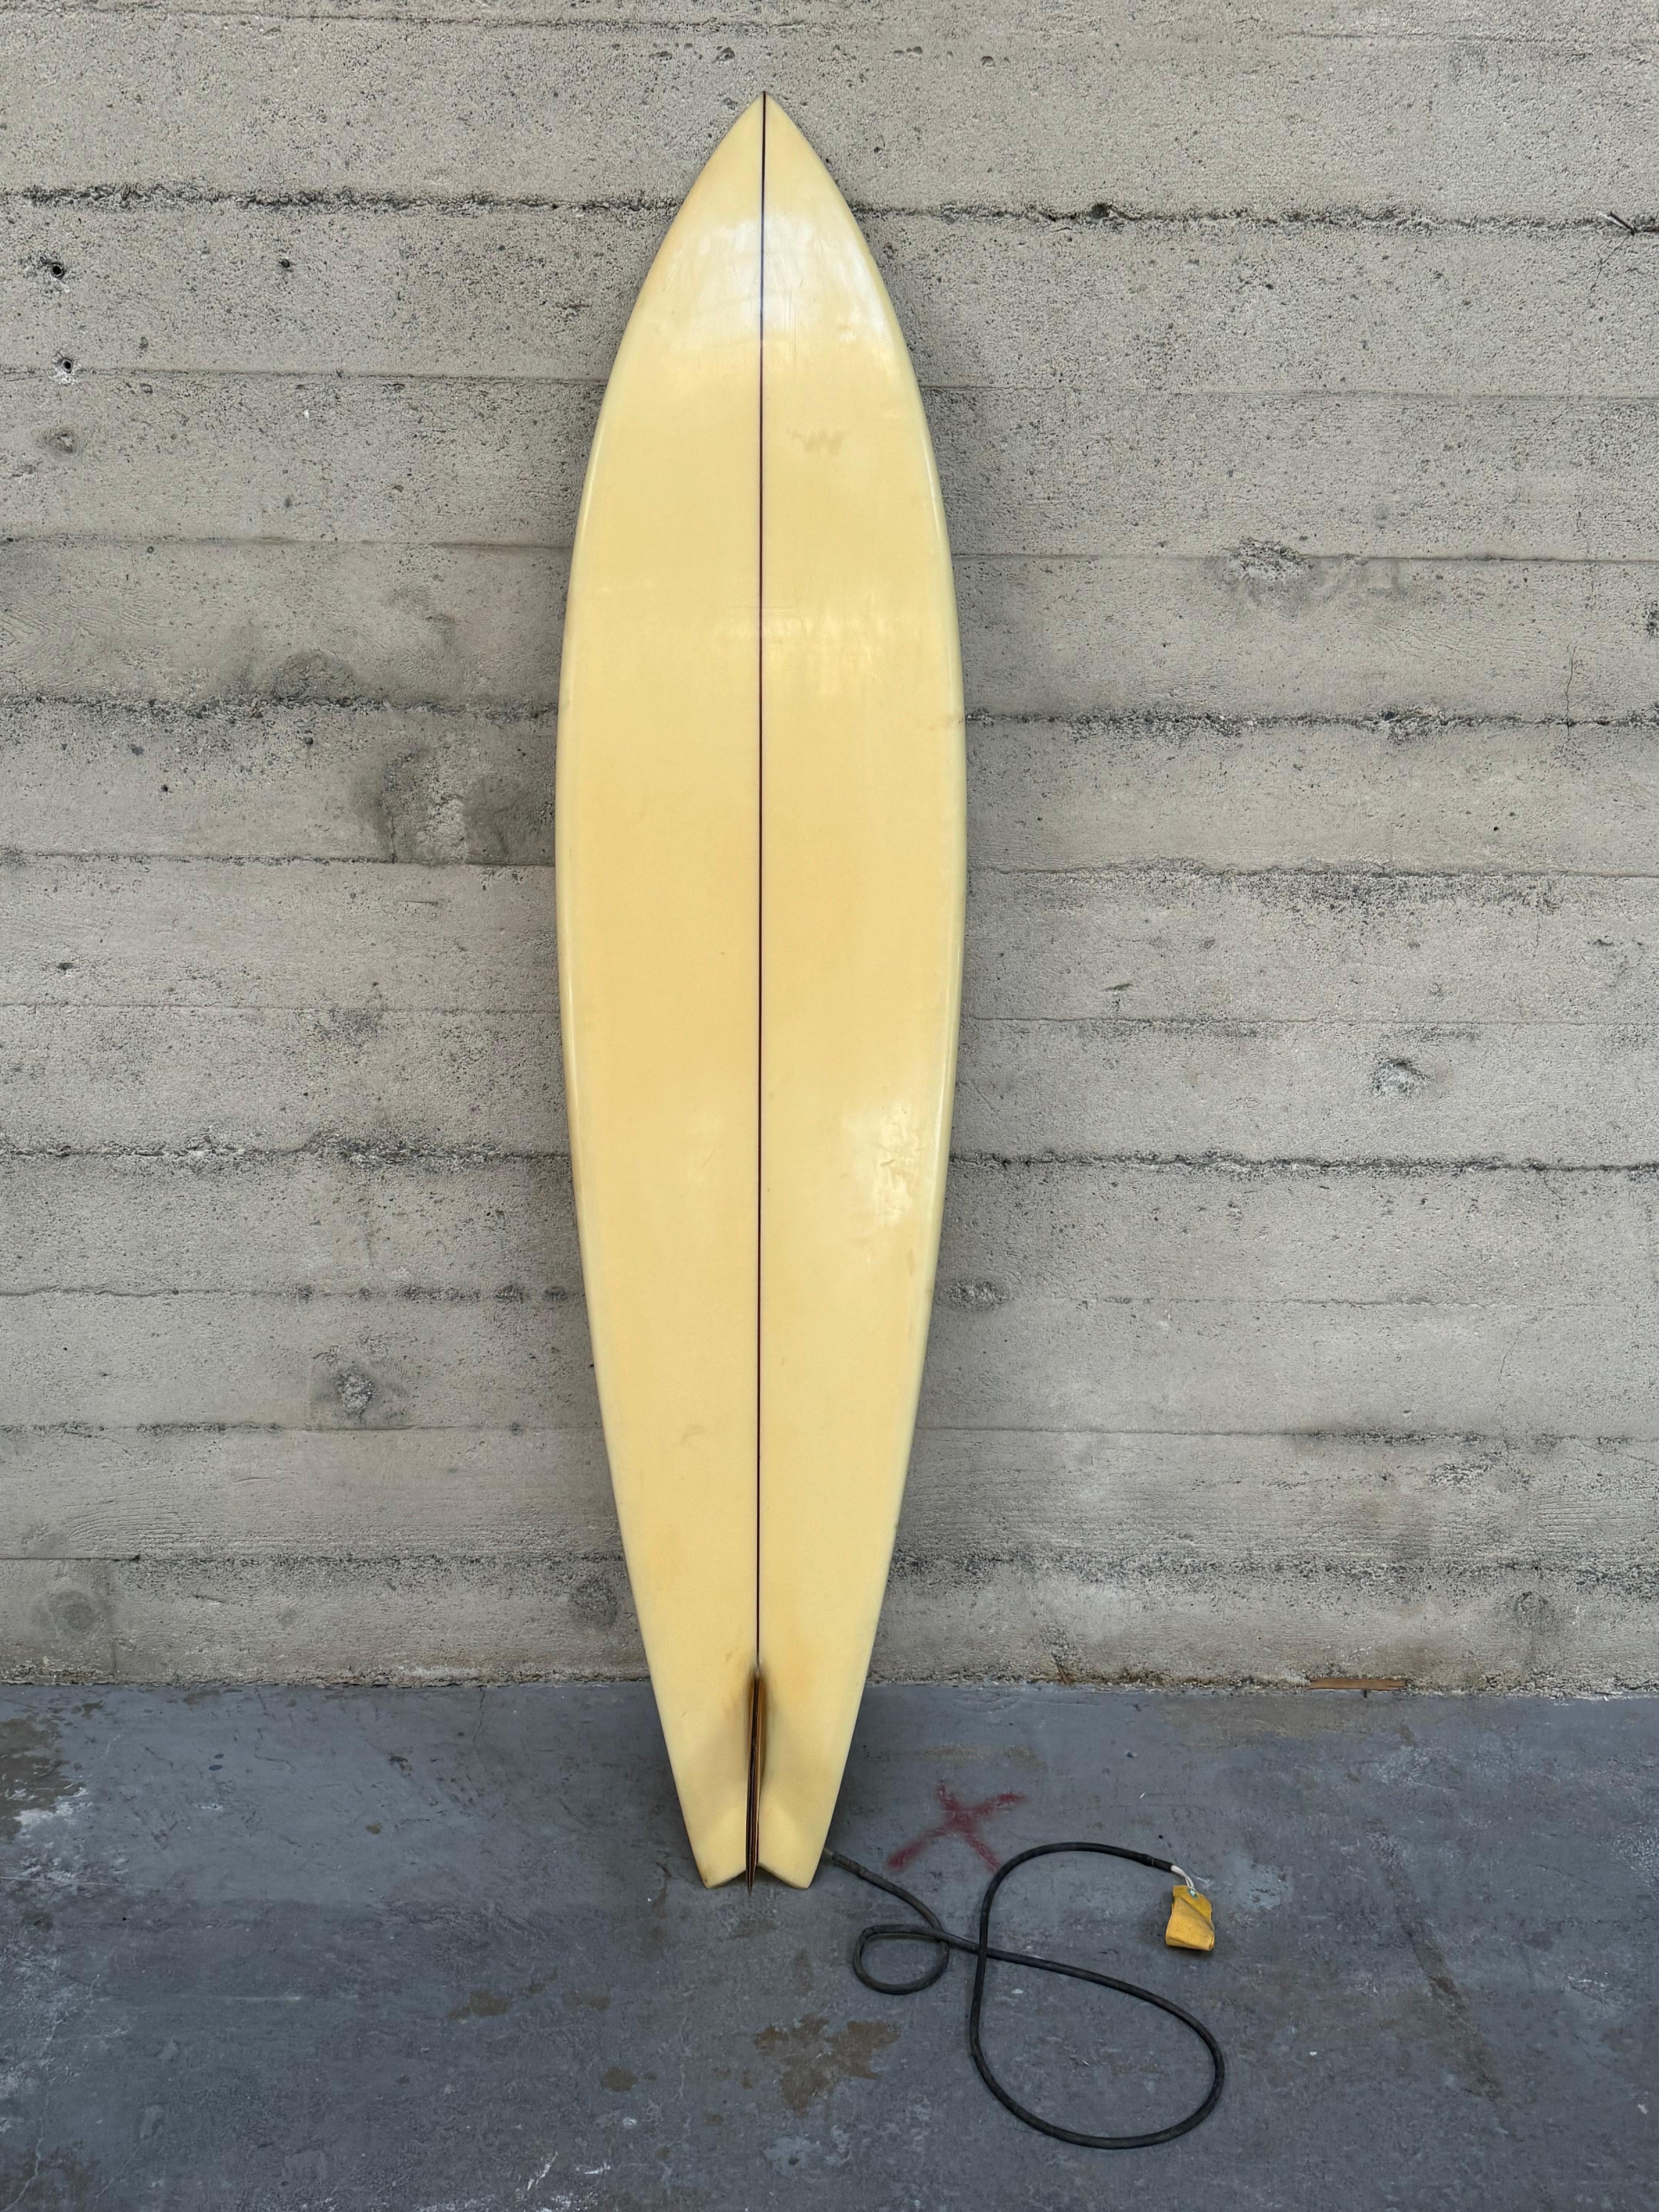 Organic Modern 1970s Joey Thomas Single Fin Surfboard an Santa Cruz Surf History Artifact For Sale